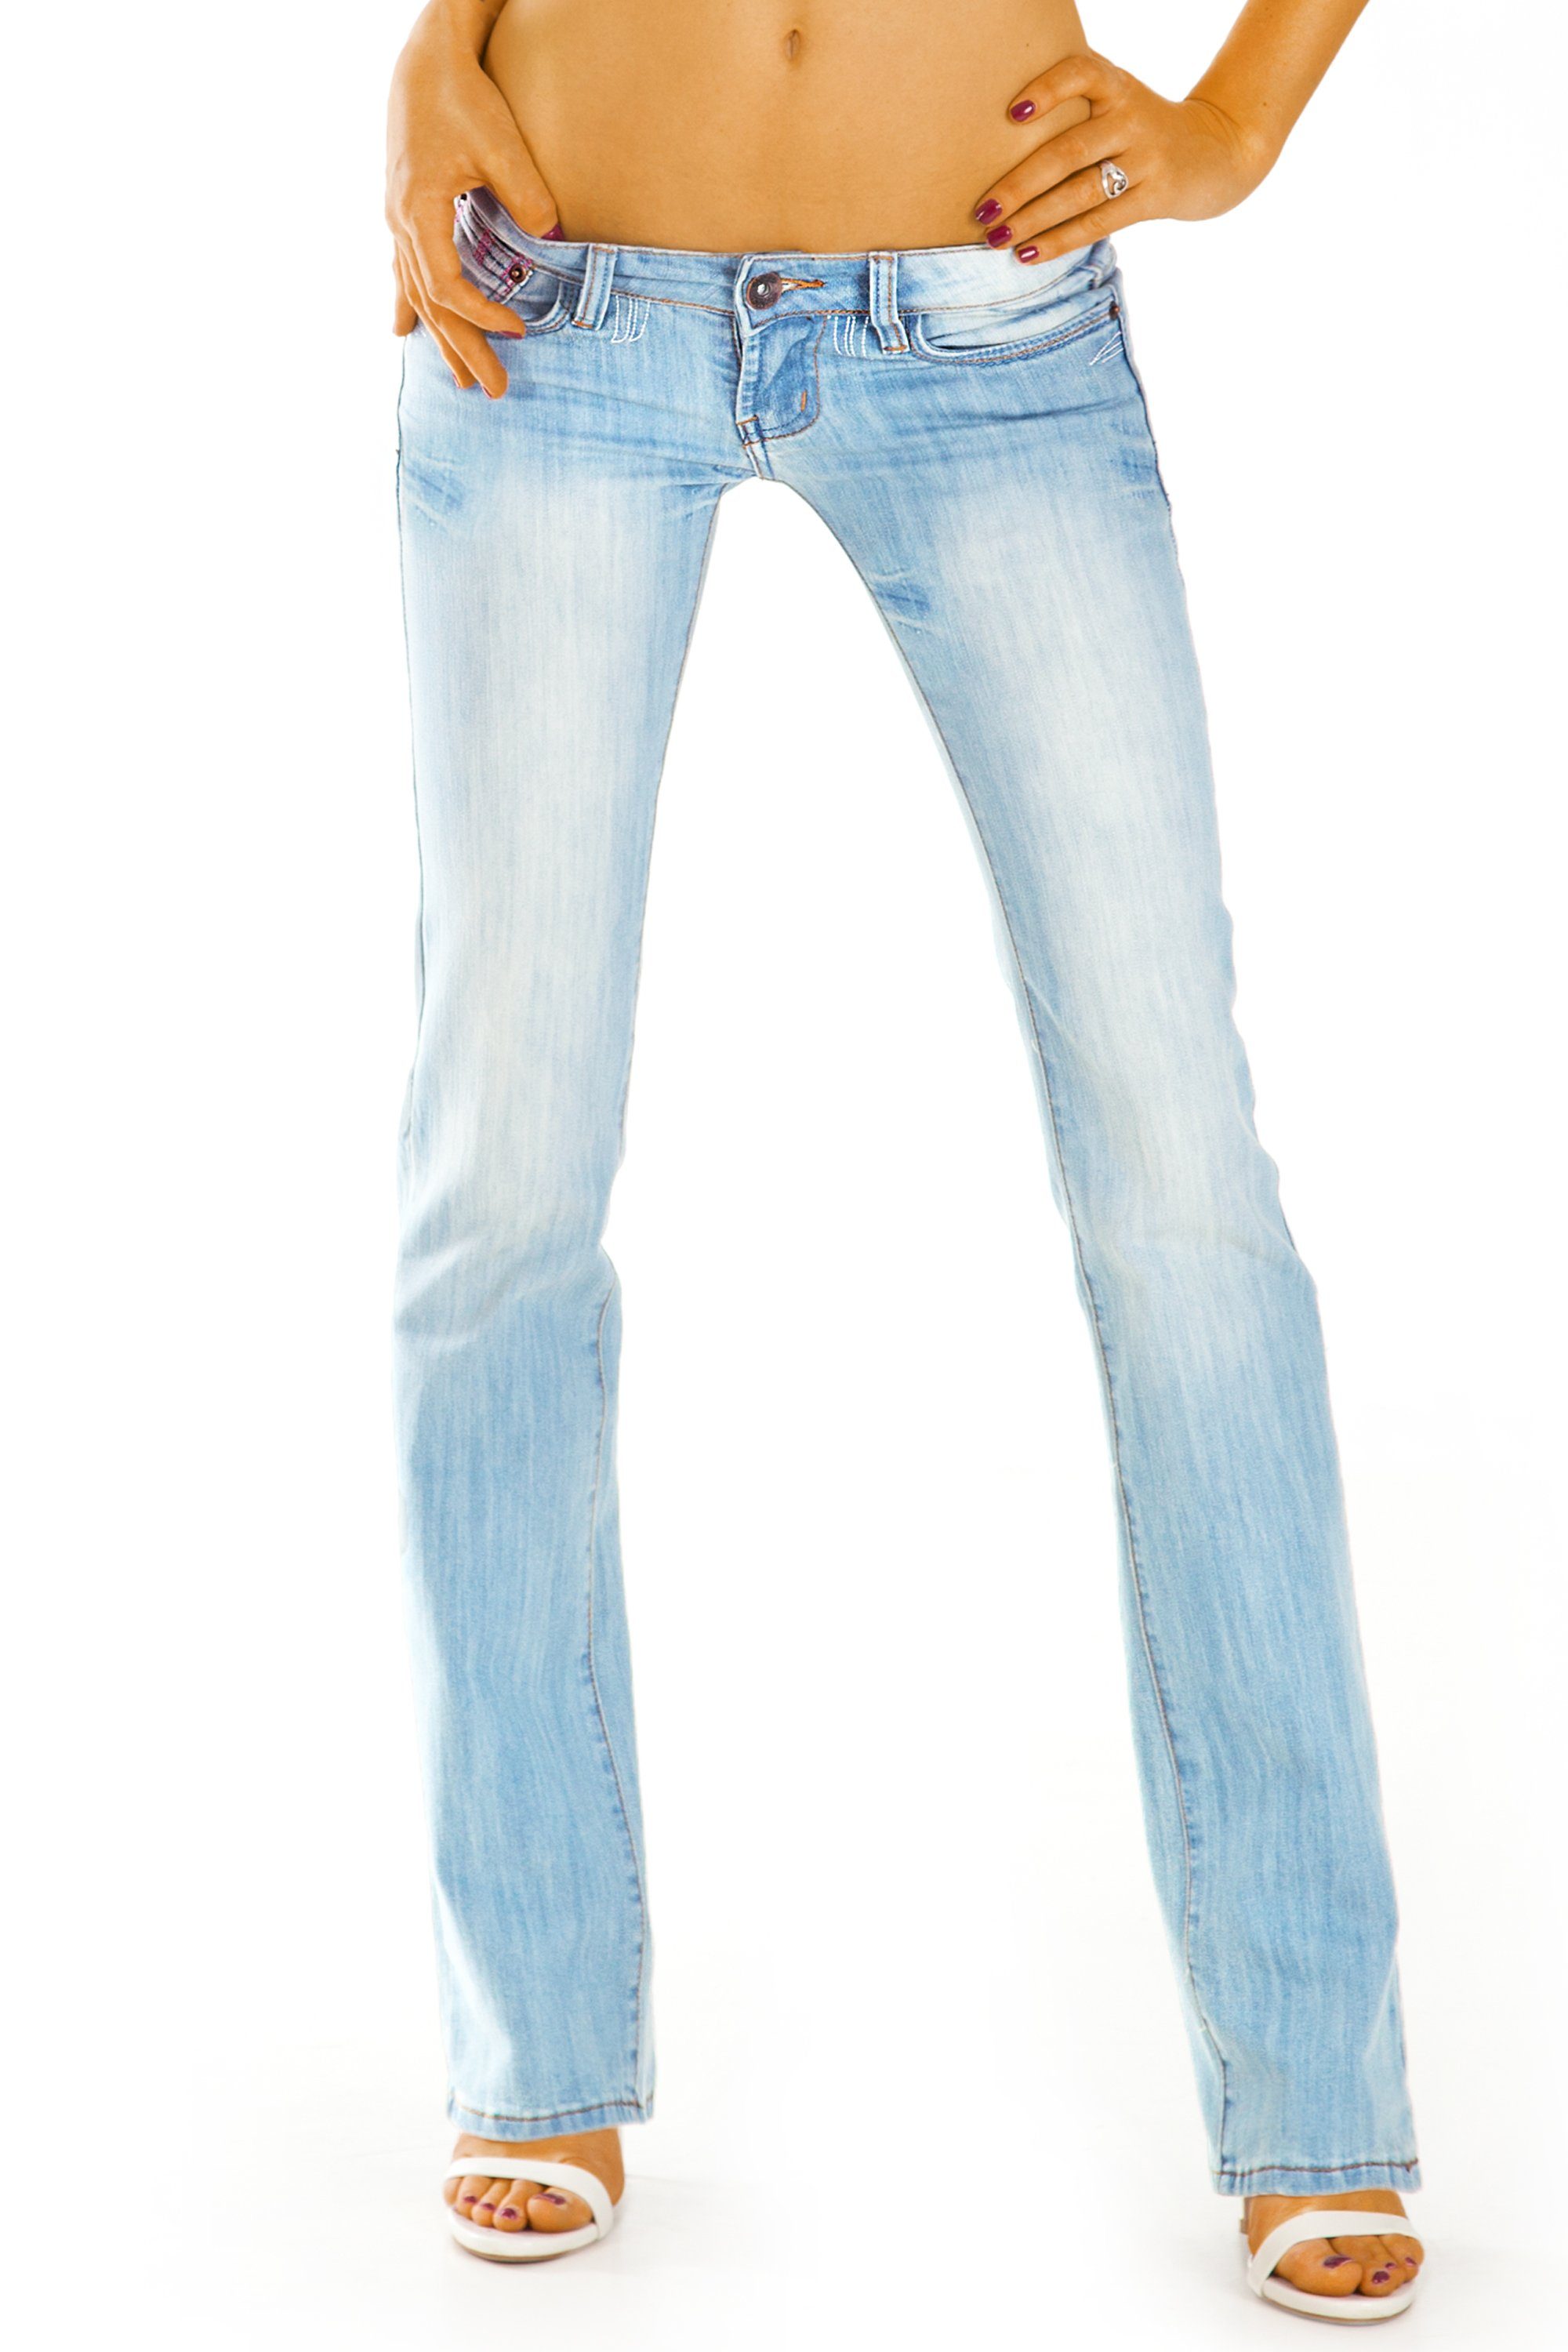 styled tiefer Bootcut-Jeans be Leibhöhe mit Stretch-Anteil, sehr Hüftjeans extrem - Damen - 5-pOcket-Style niedrige Jeanshose j37a-1 Bootcut Leibhöhe,